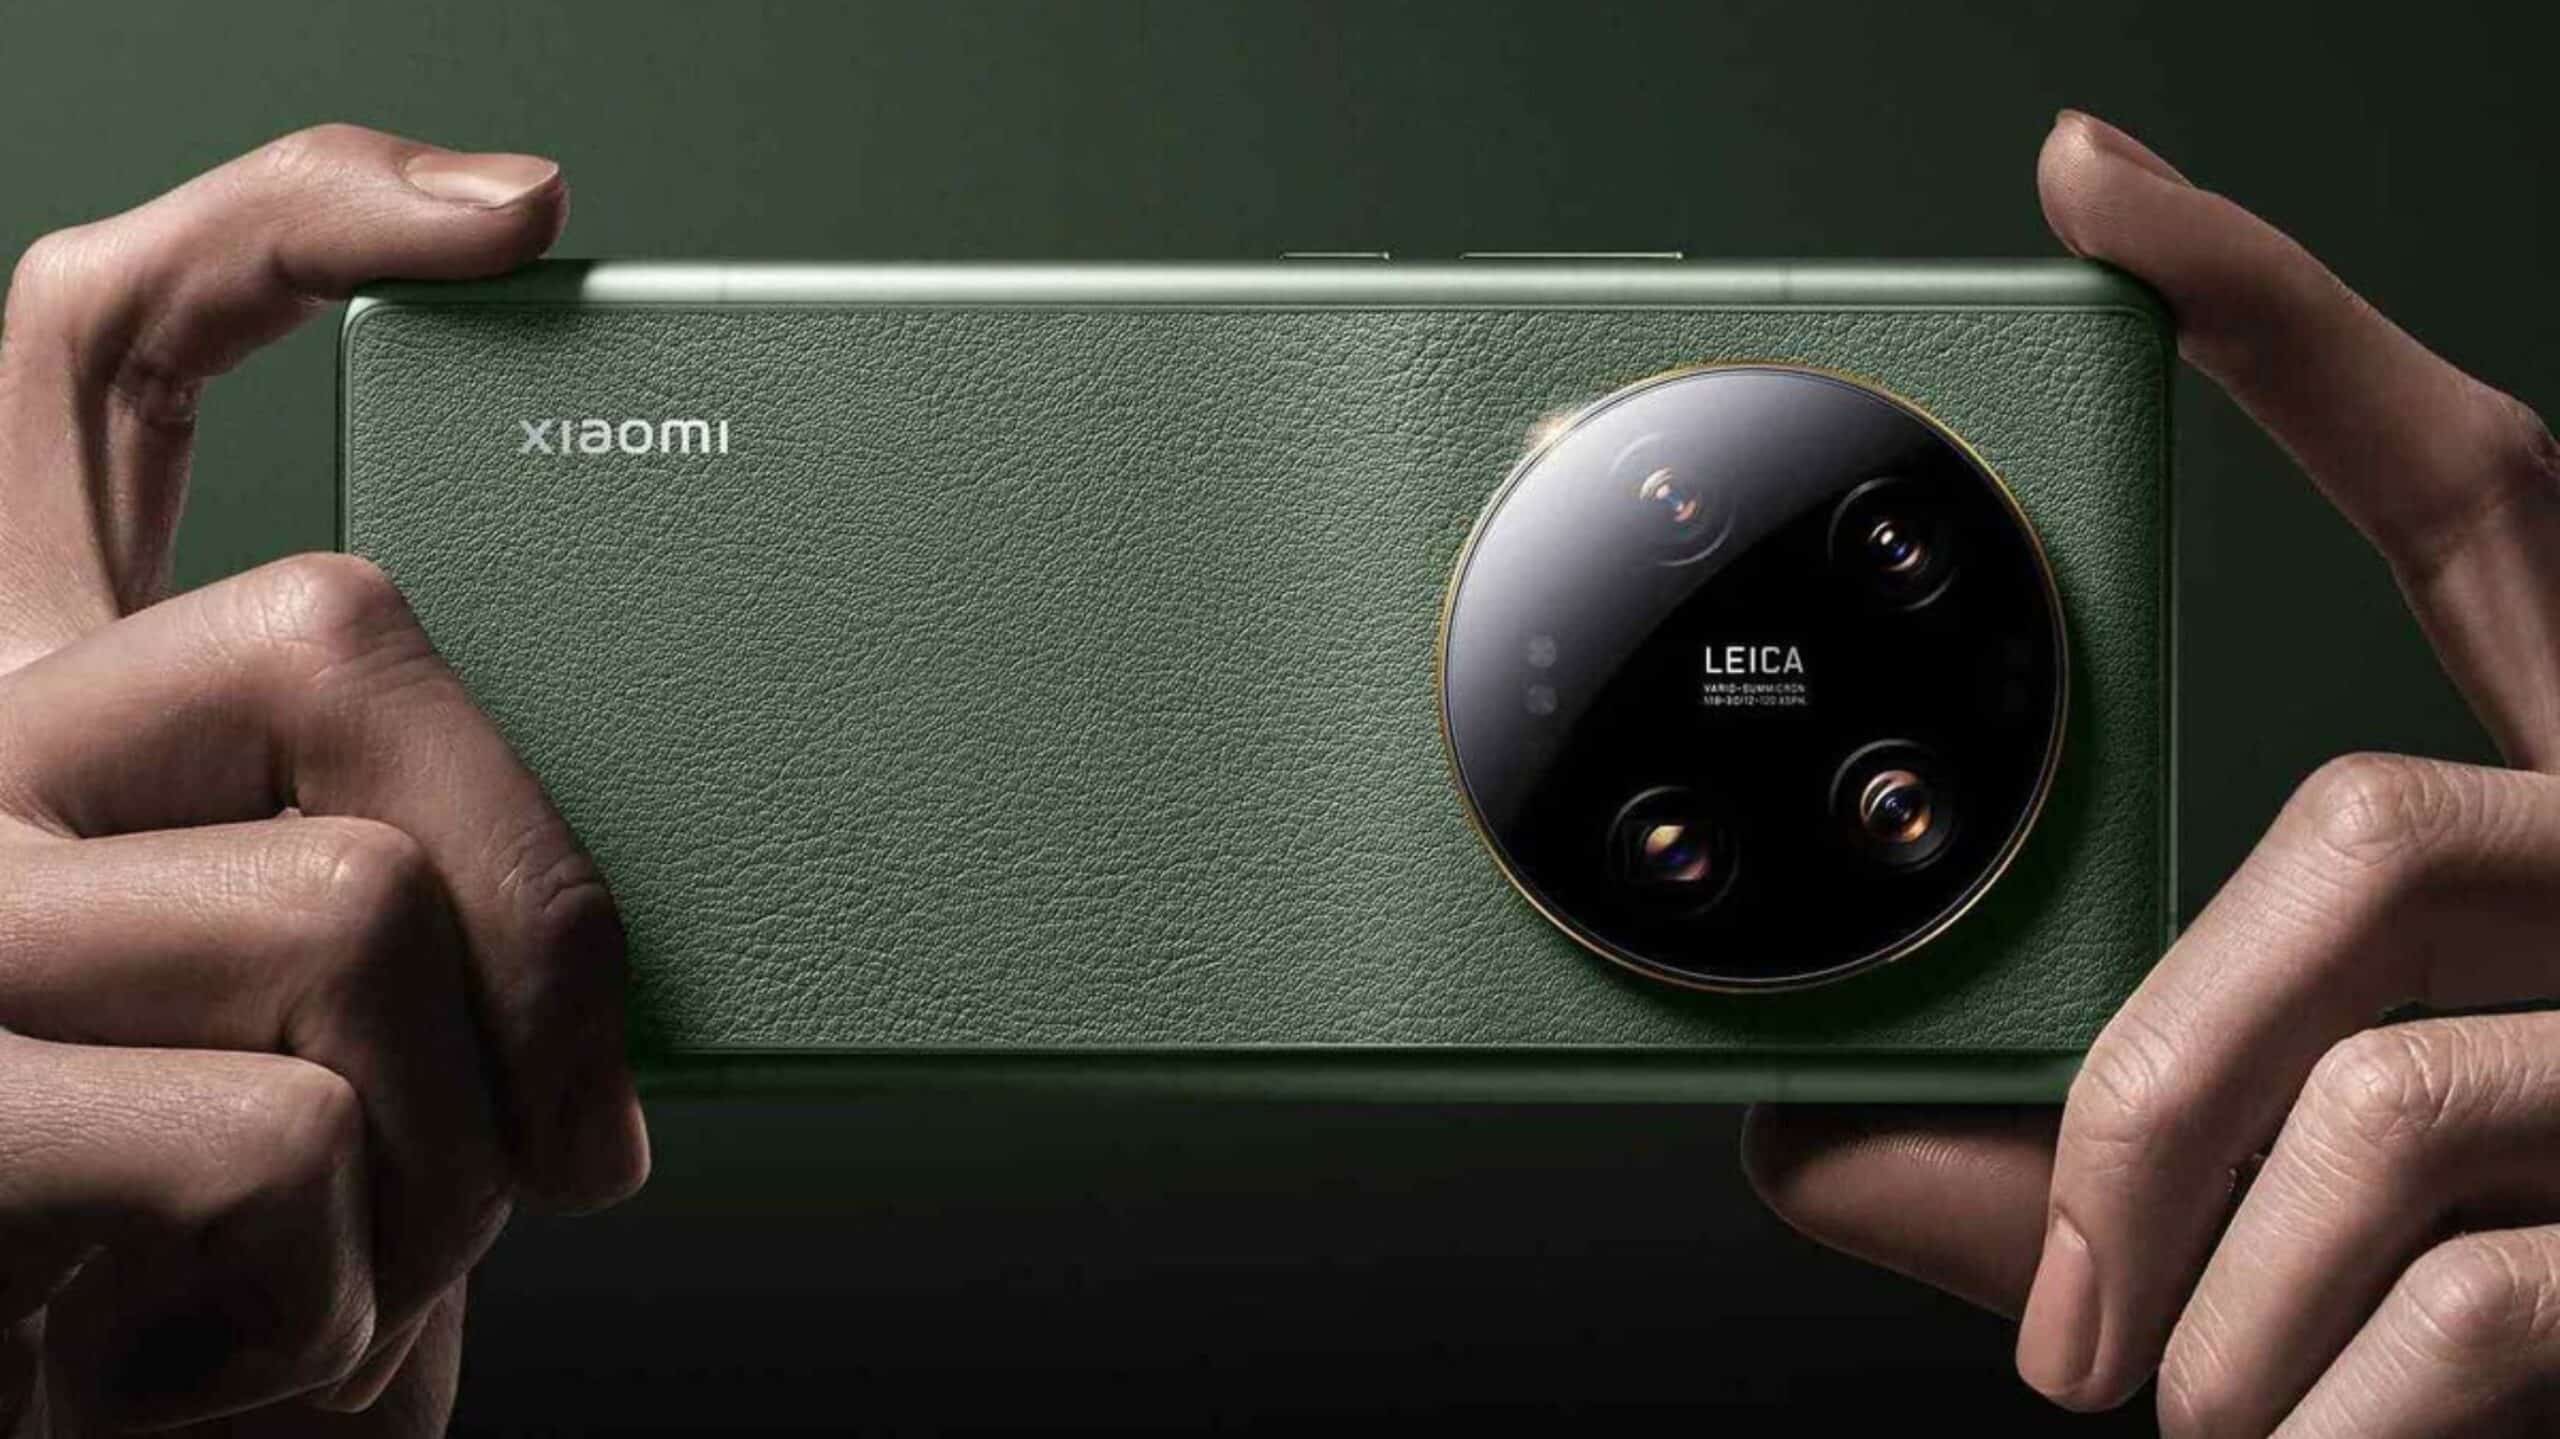 Instituto Óptico Xiaomi x Leica